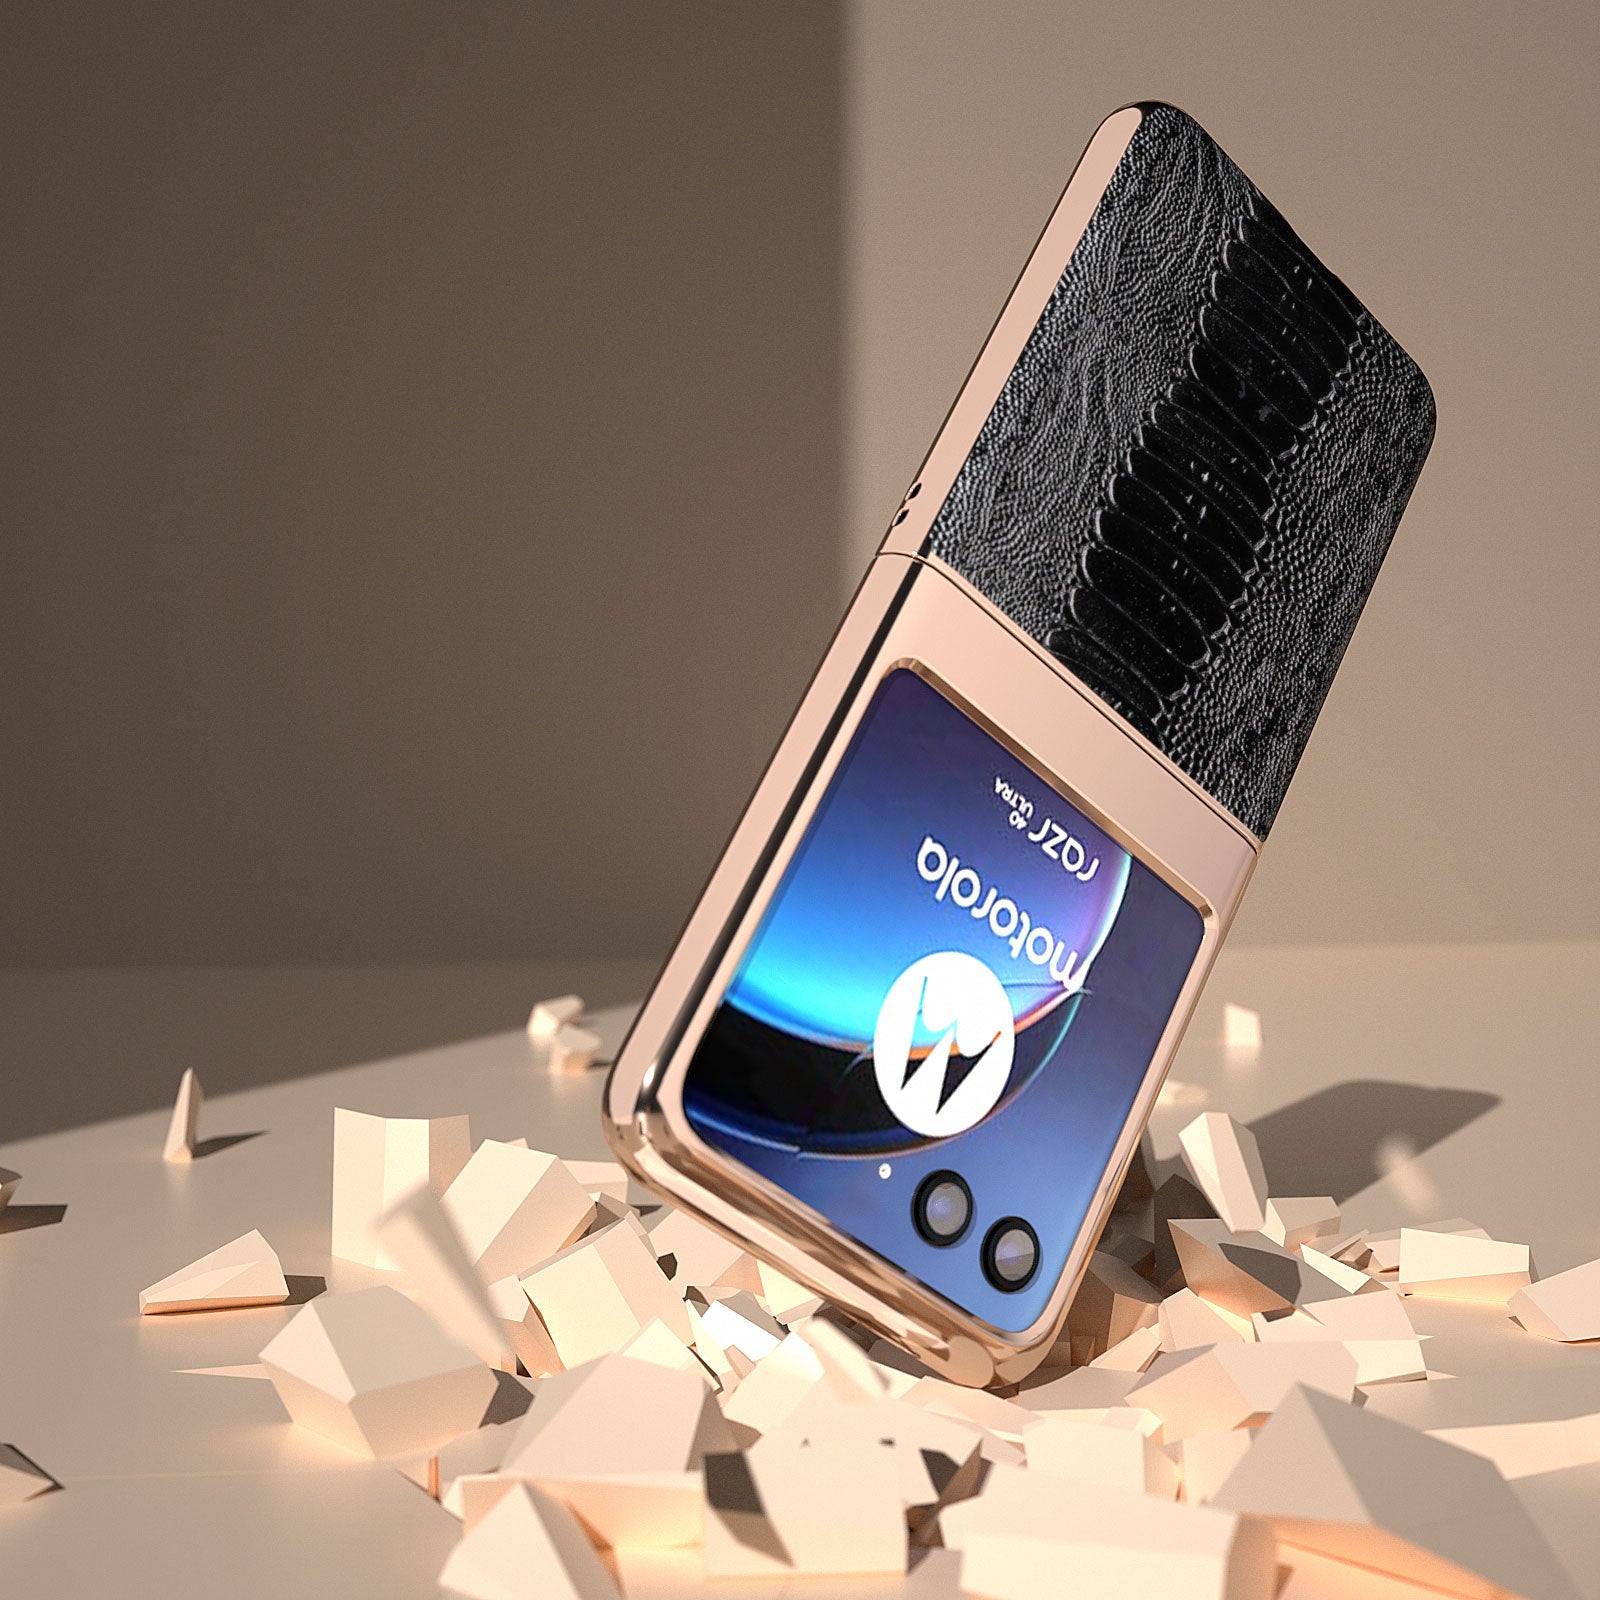 Uniqkart for Motorola Razr 40 Ultra 5G Crocodile Texture Thin Cover Genuine Cow Leather + PC Electroplating Phone Case - Black